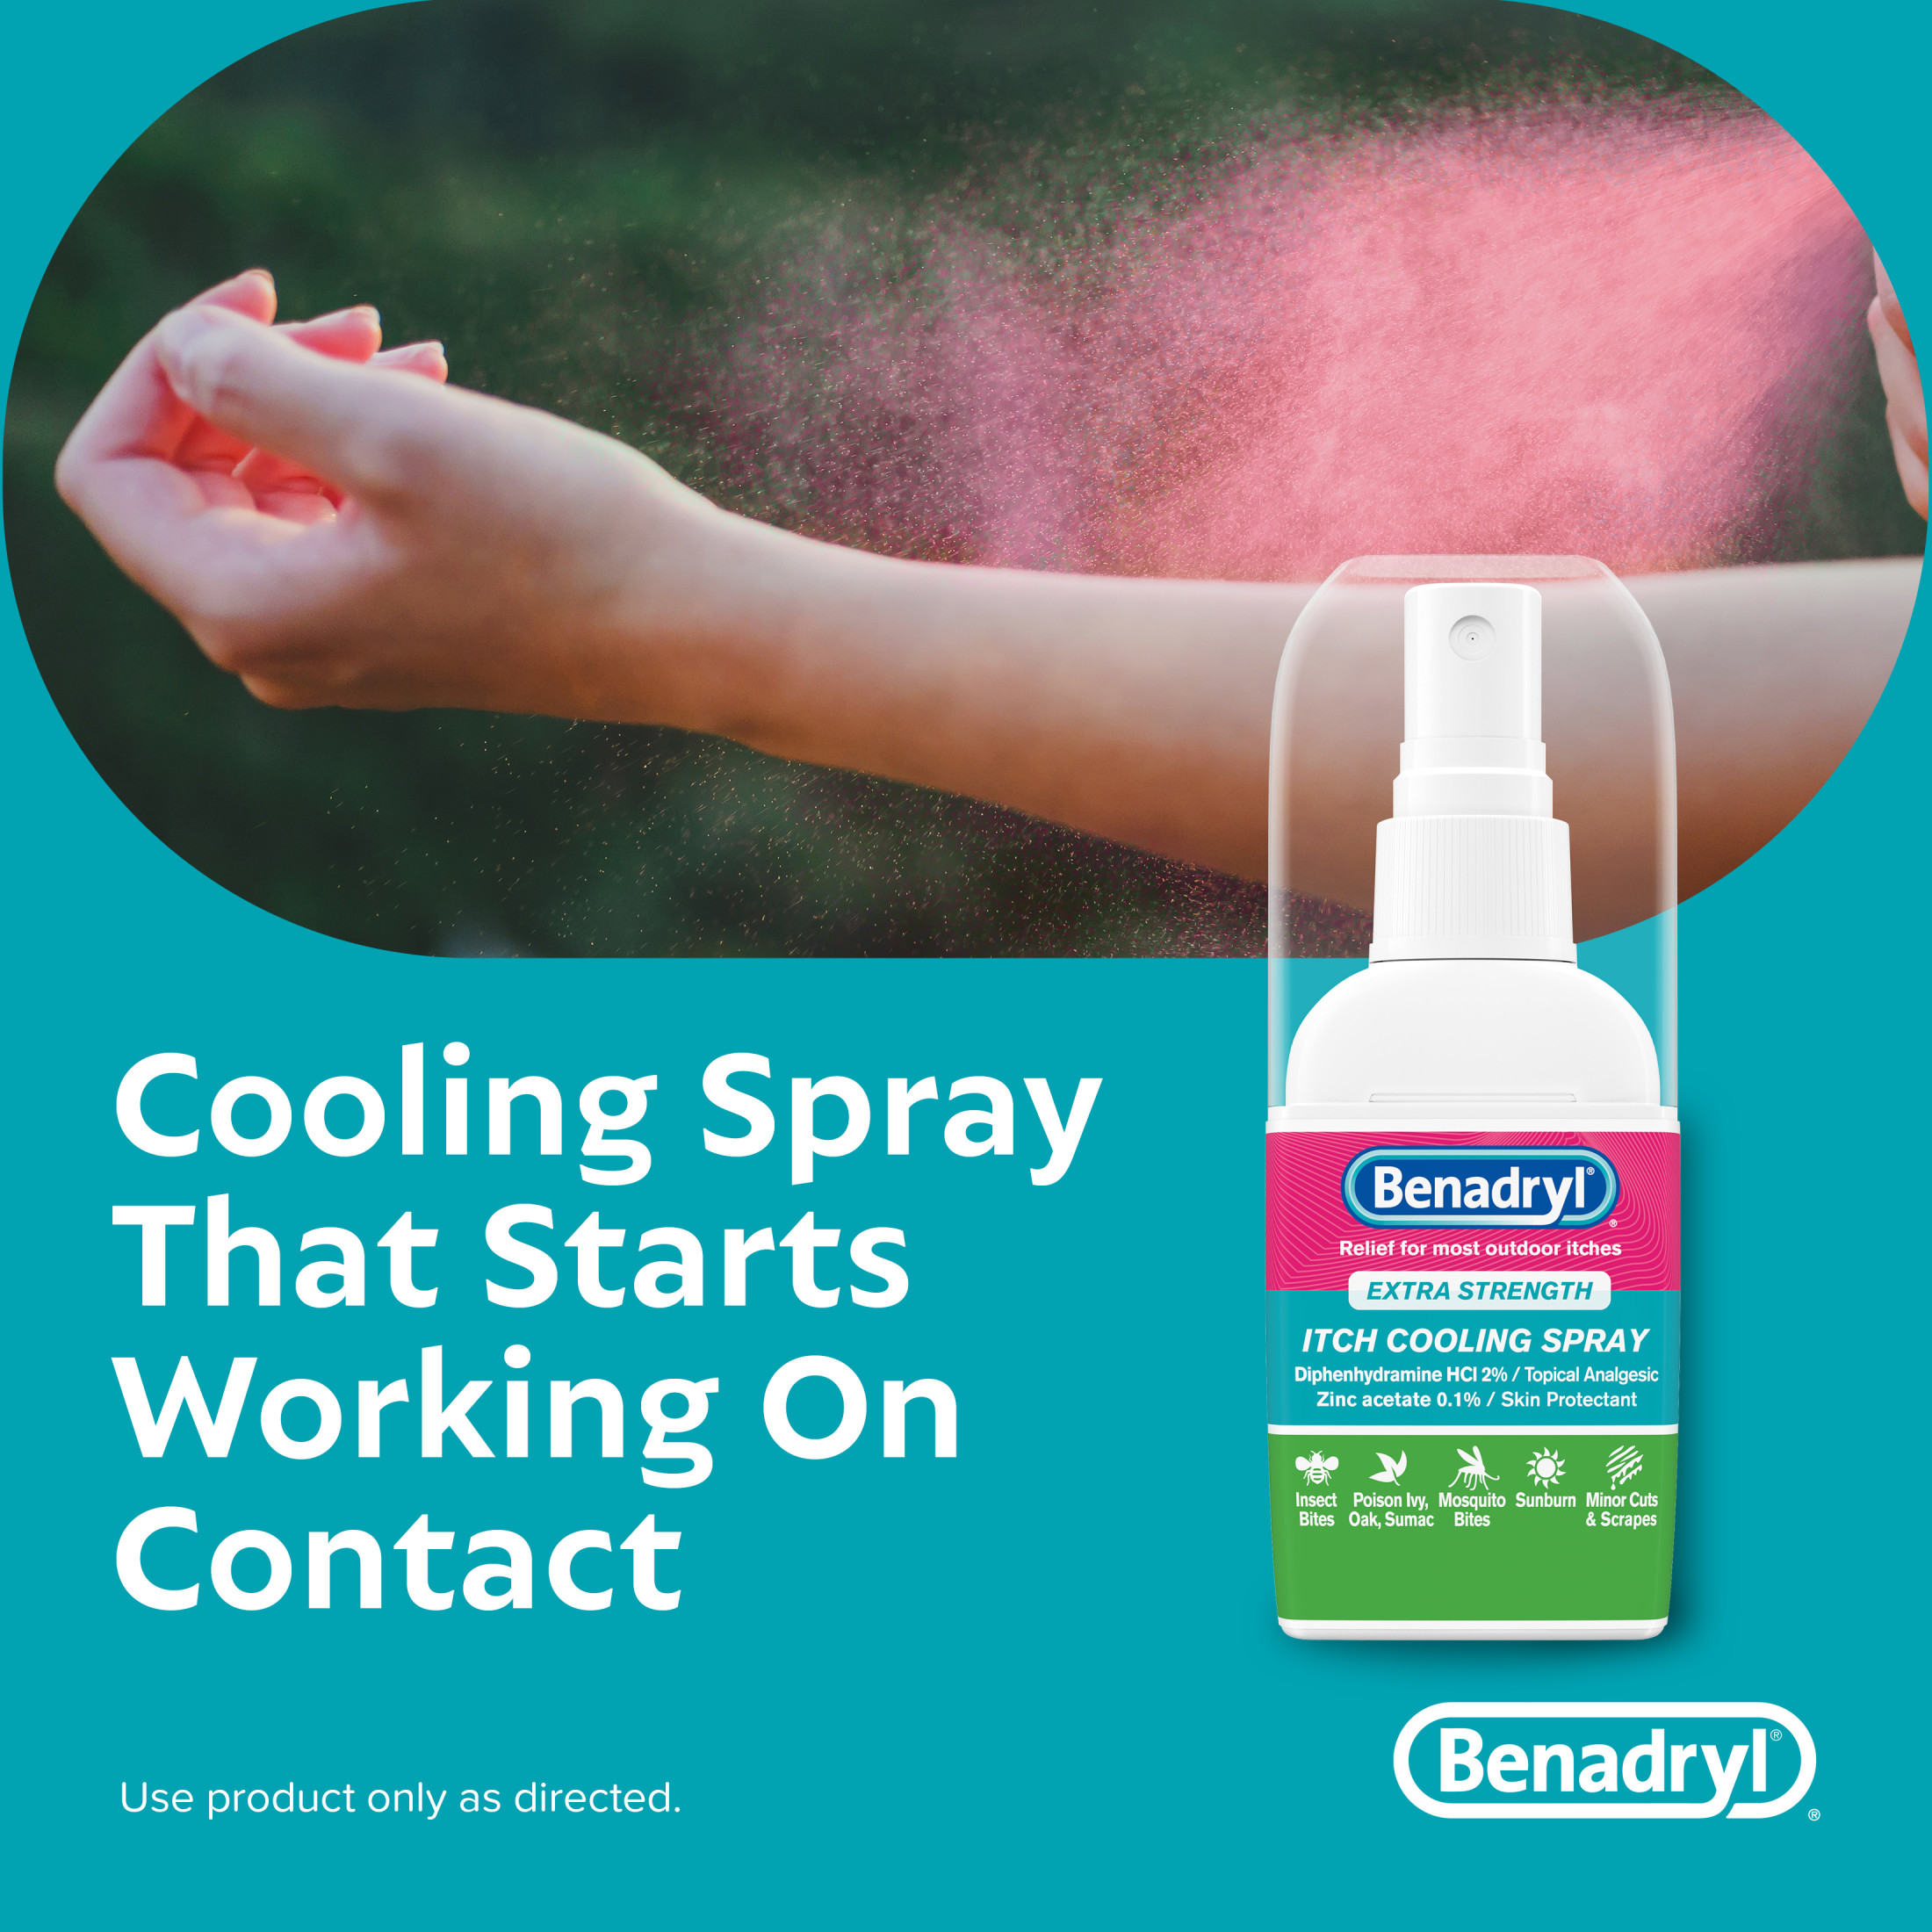 Benadryl Extra Strength Anti-Itch Cooling Spray, Travel Size, 2 fl. oz - image 4 of 12